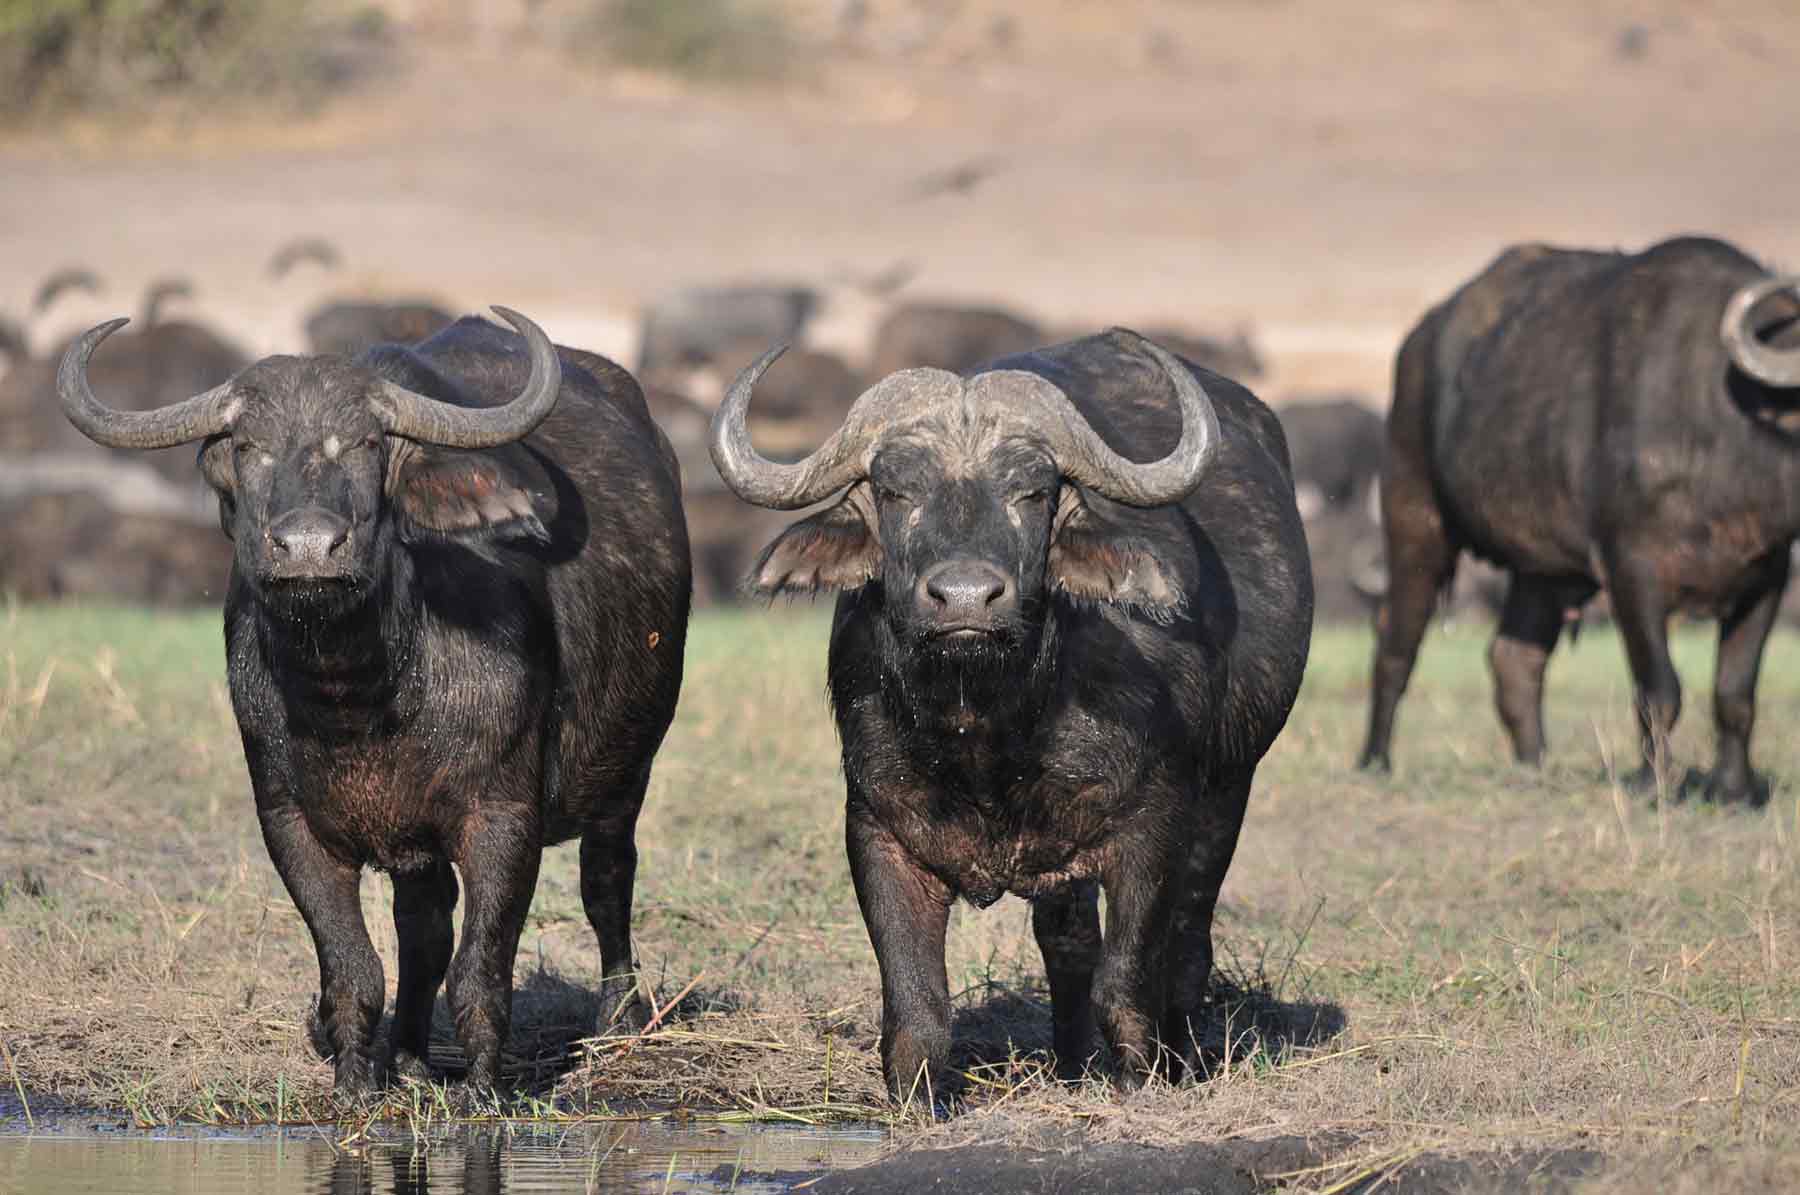 Buffalo The Big 5 Animal Safari